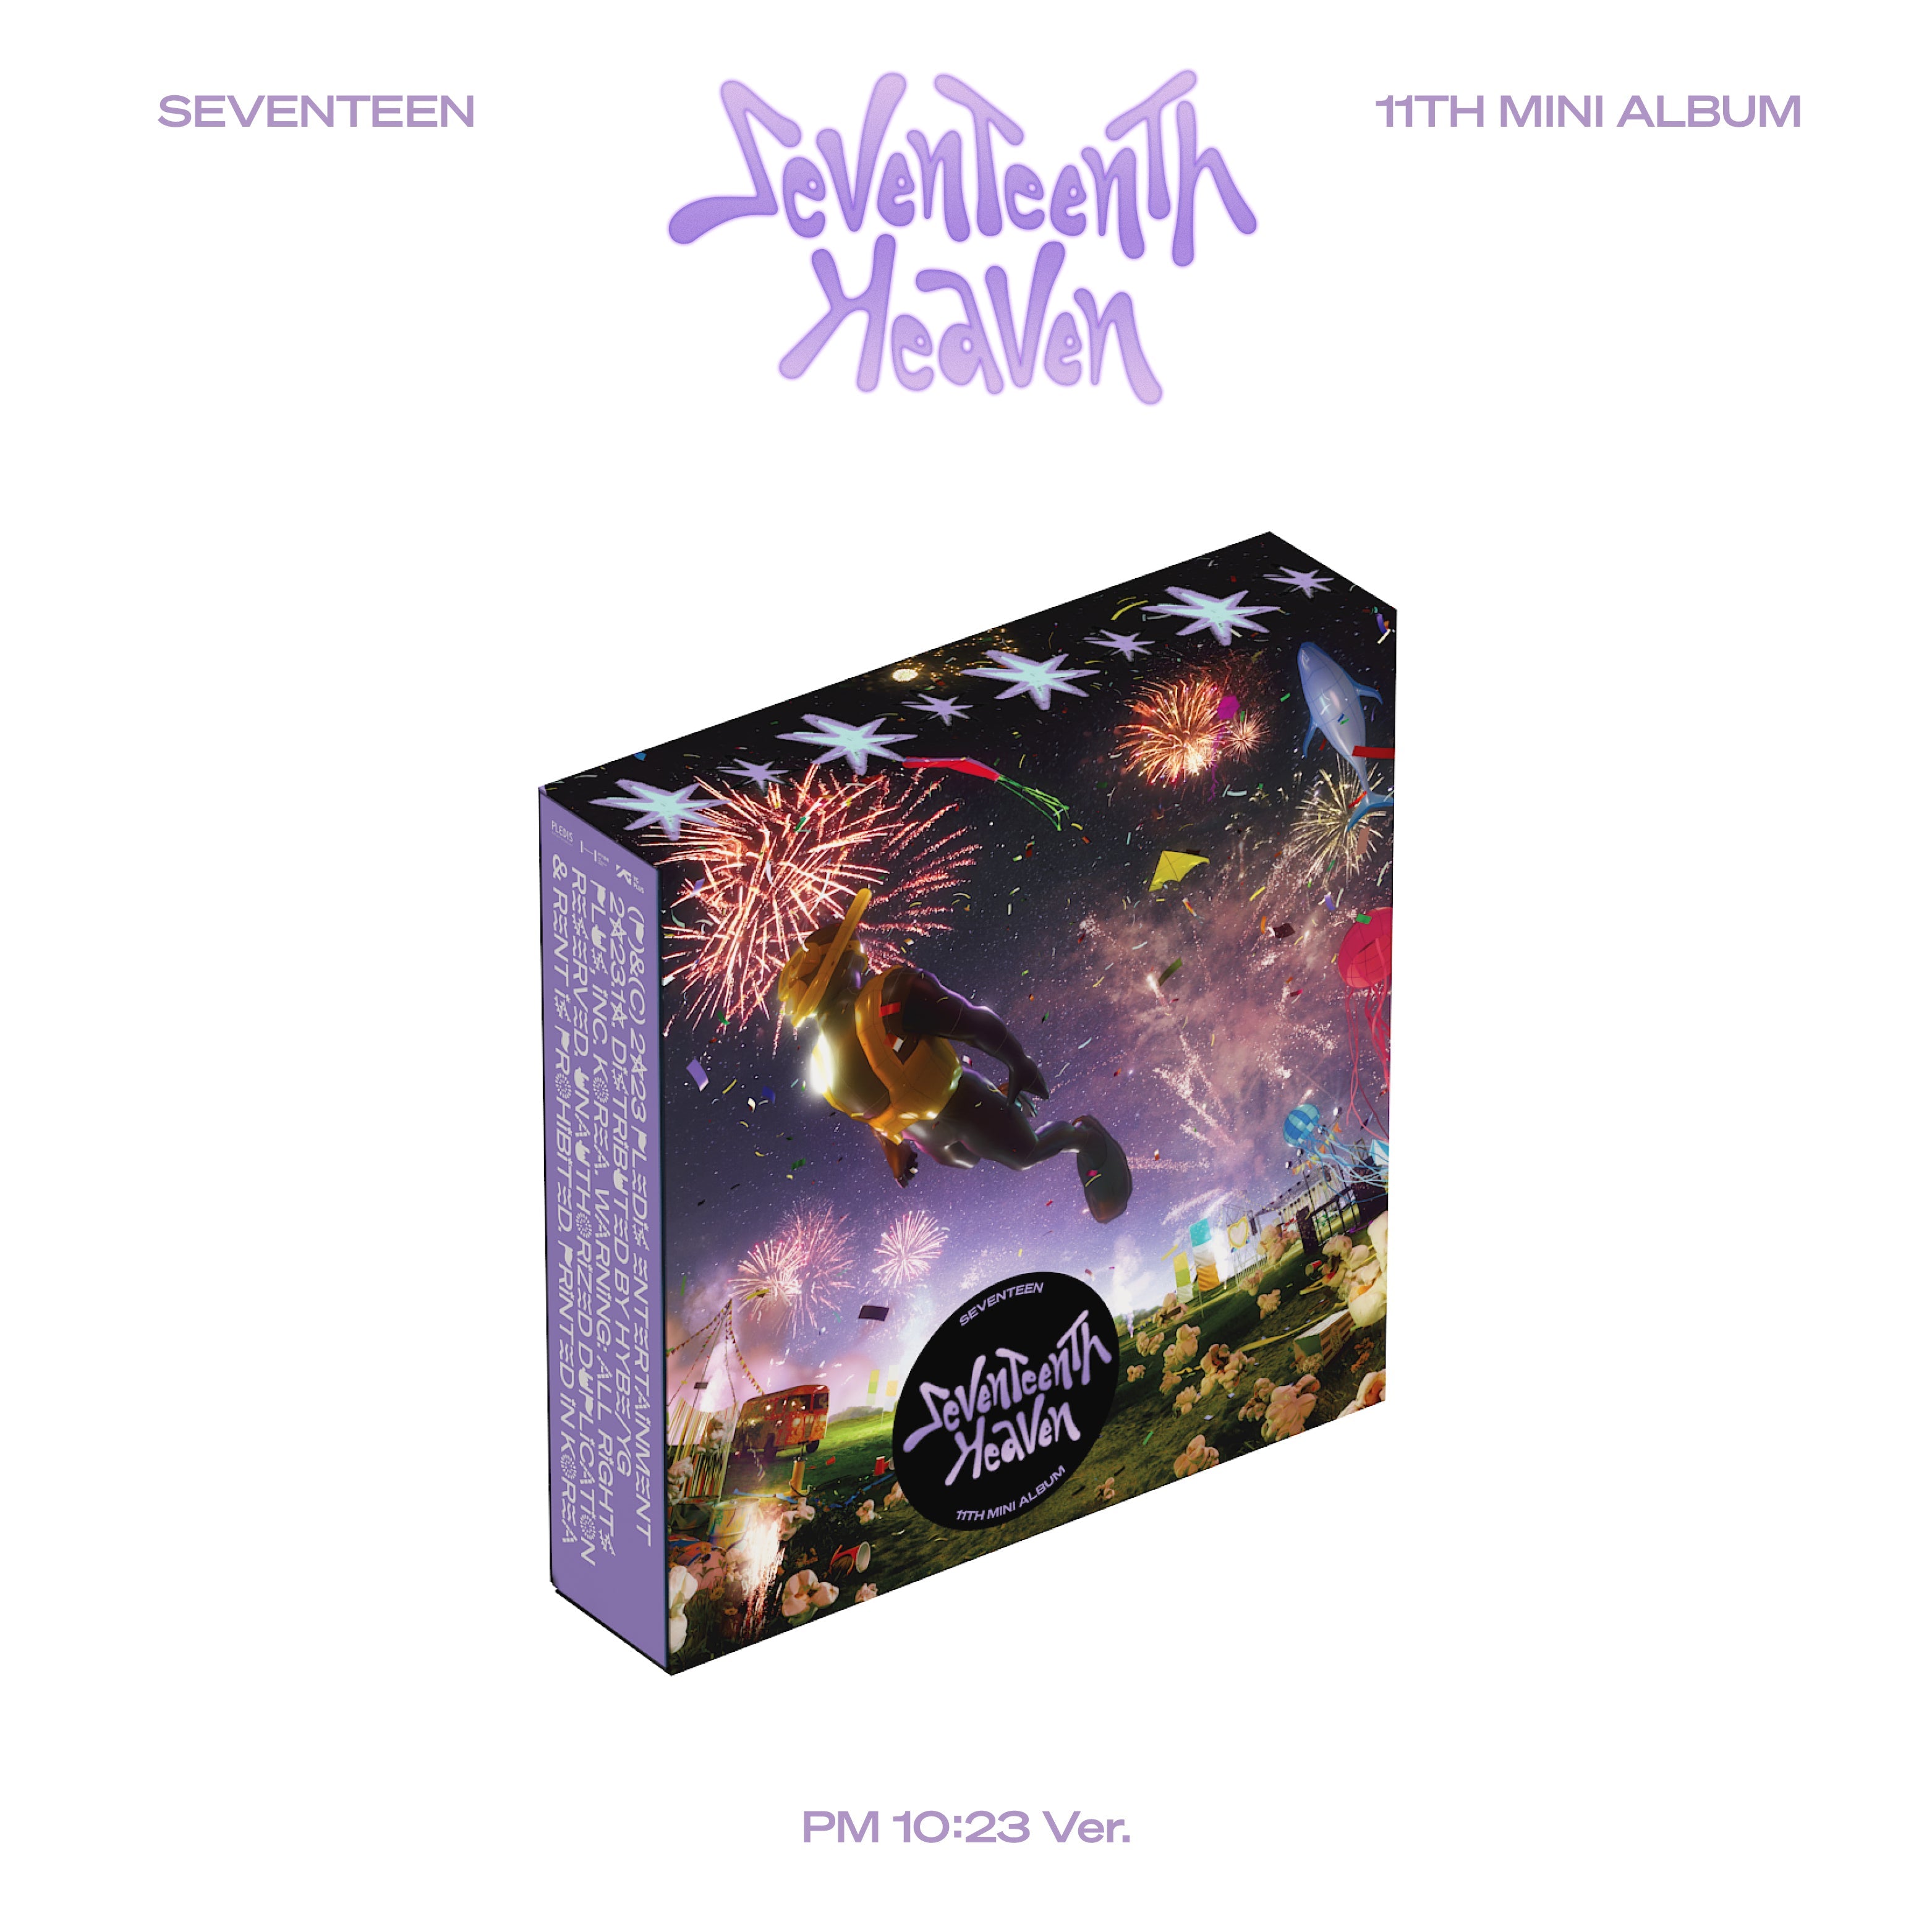 SEVENTEEN 11th Mini Album 'SEVENTEENTH HEAVEN' PM 10:23 Ver 